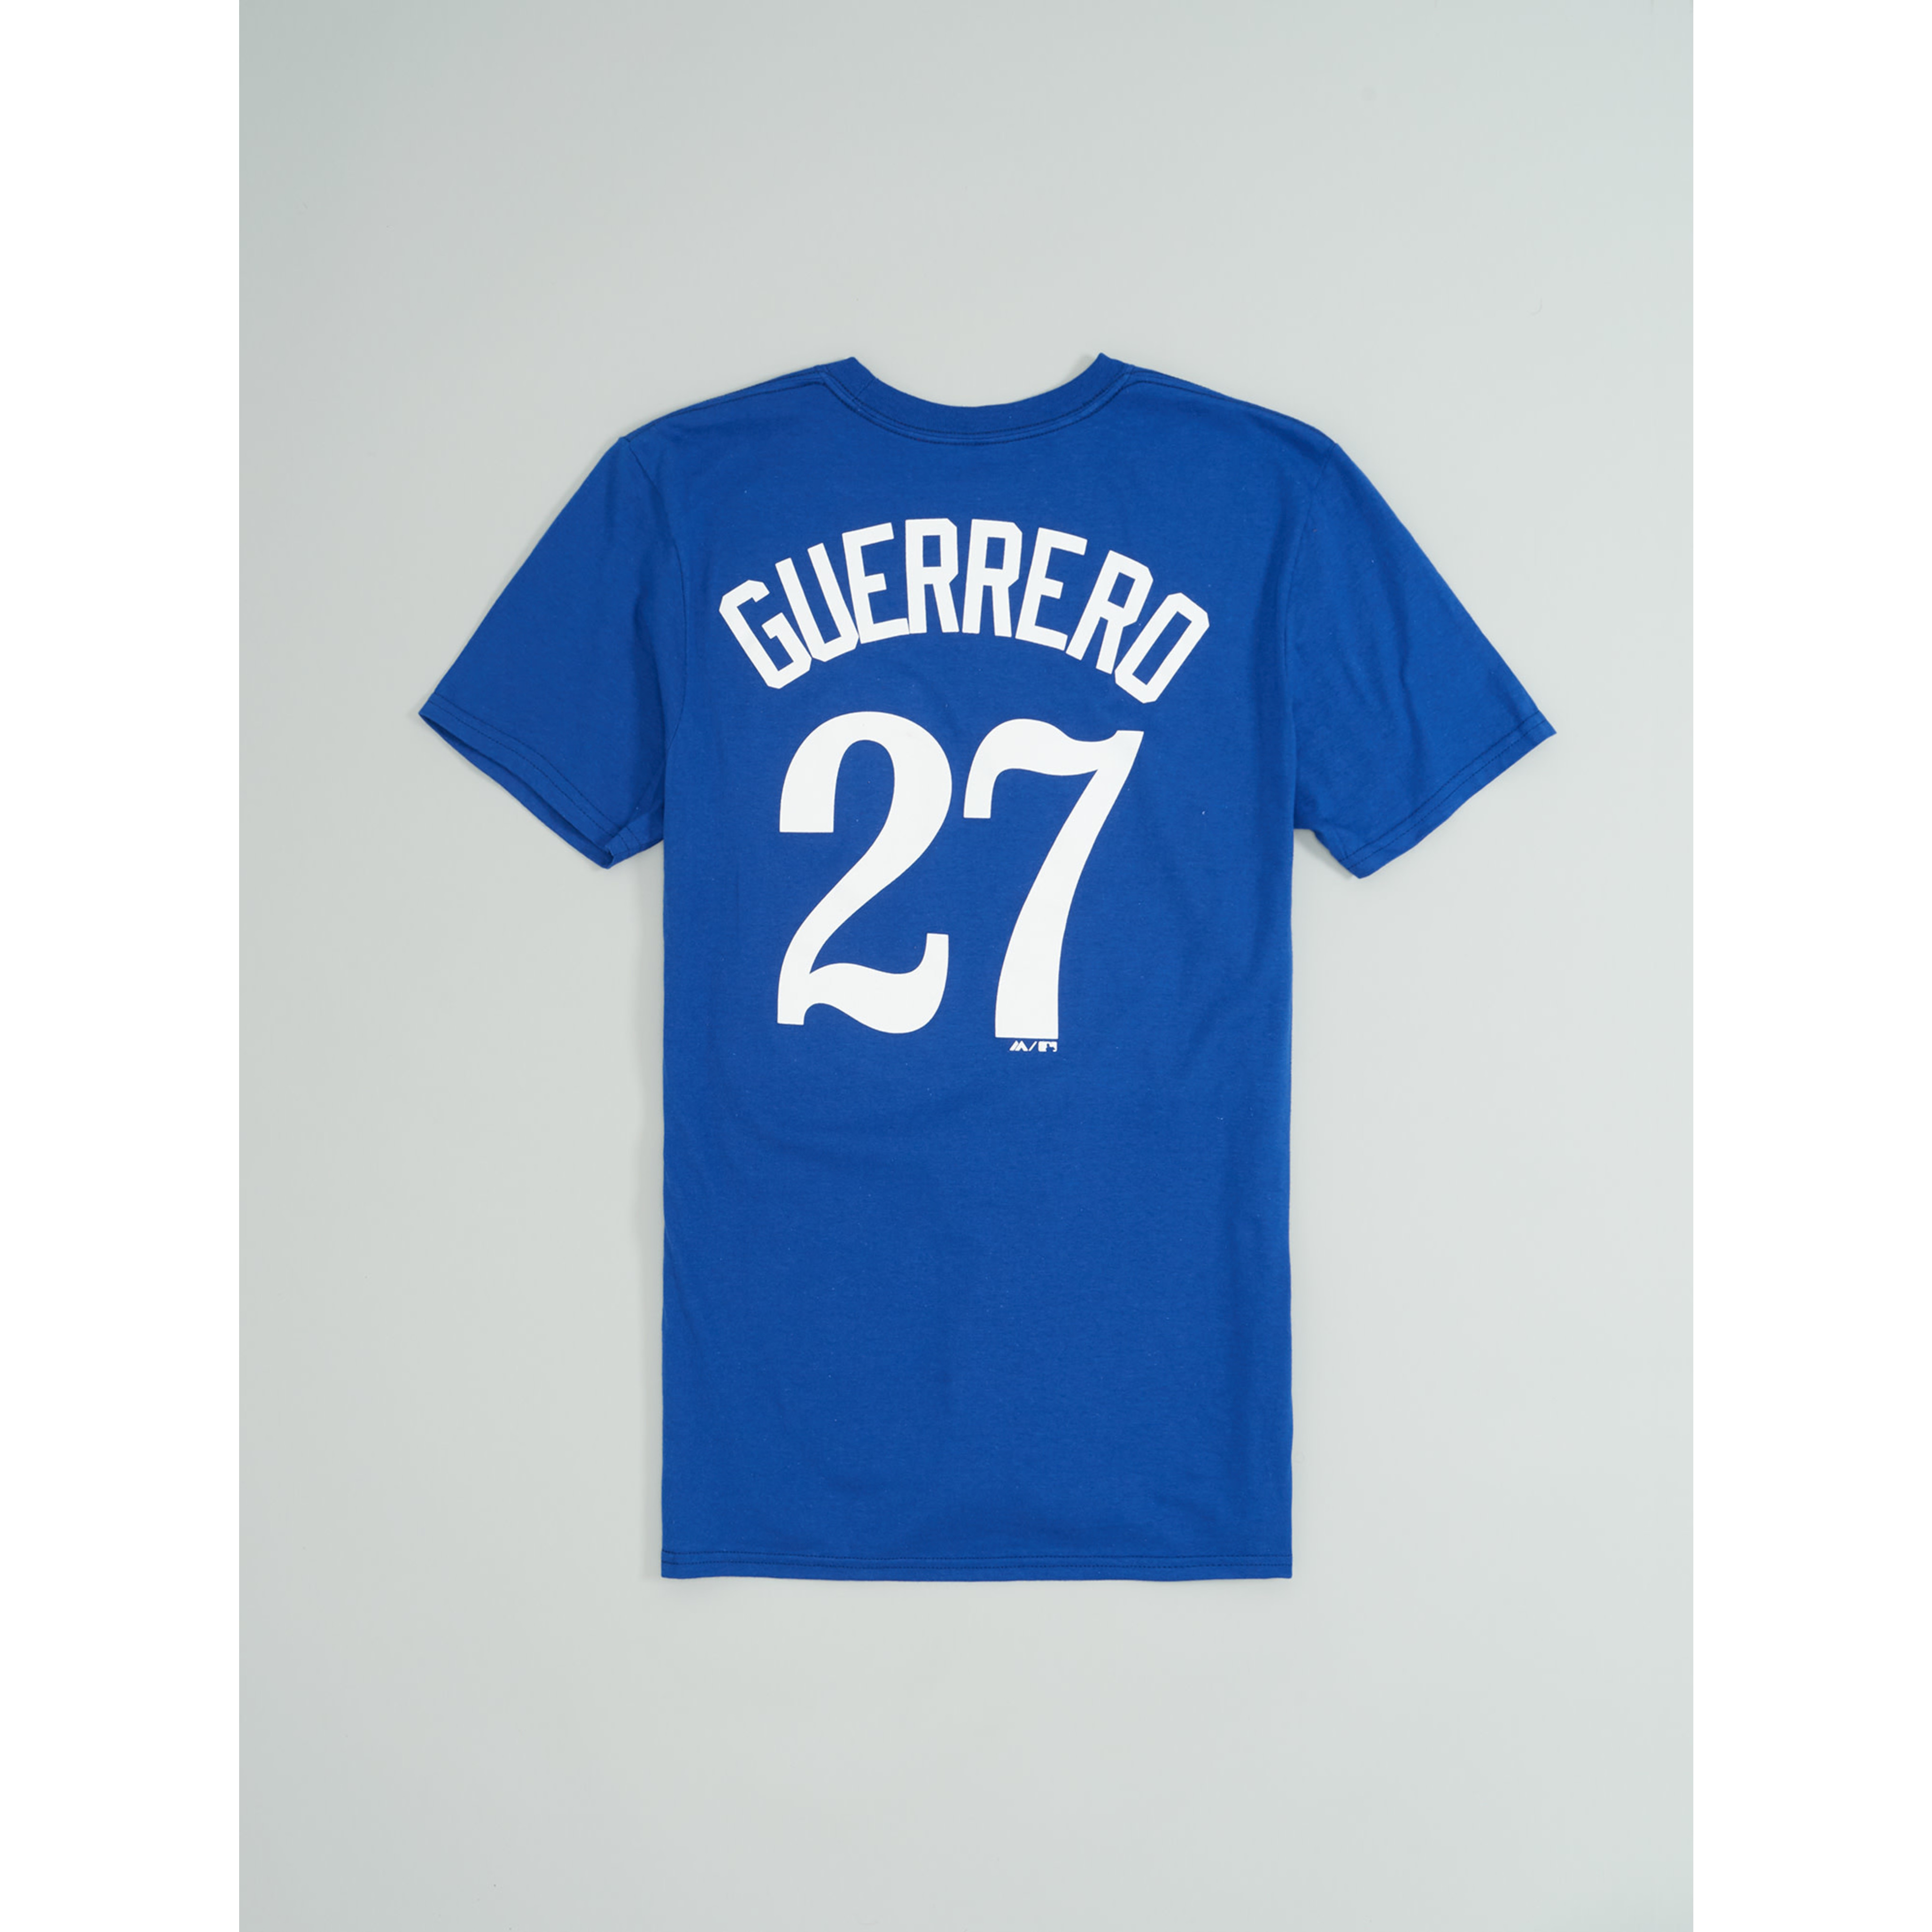 Vladimir Guerrero #27 Expos Player T-Shirt ∣ Tricolore Sports